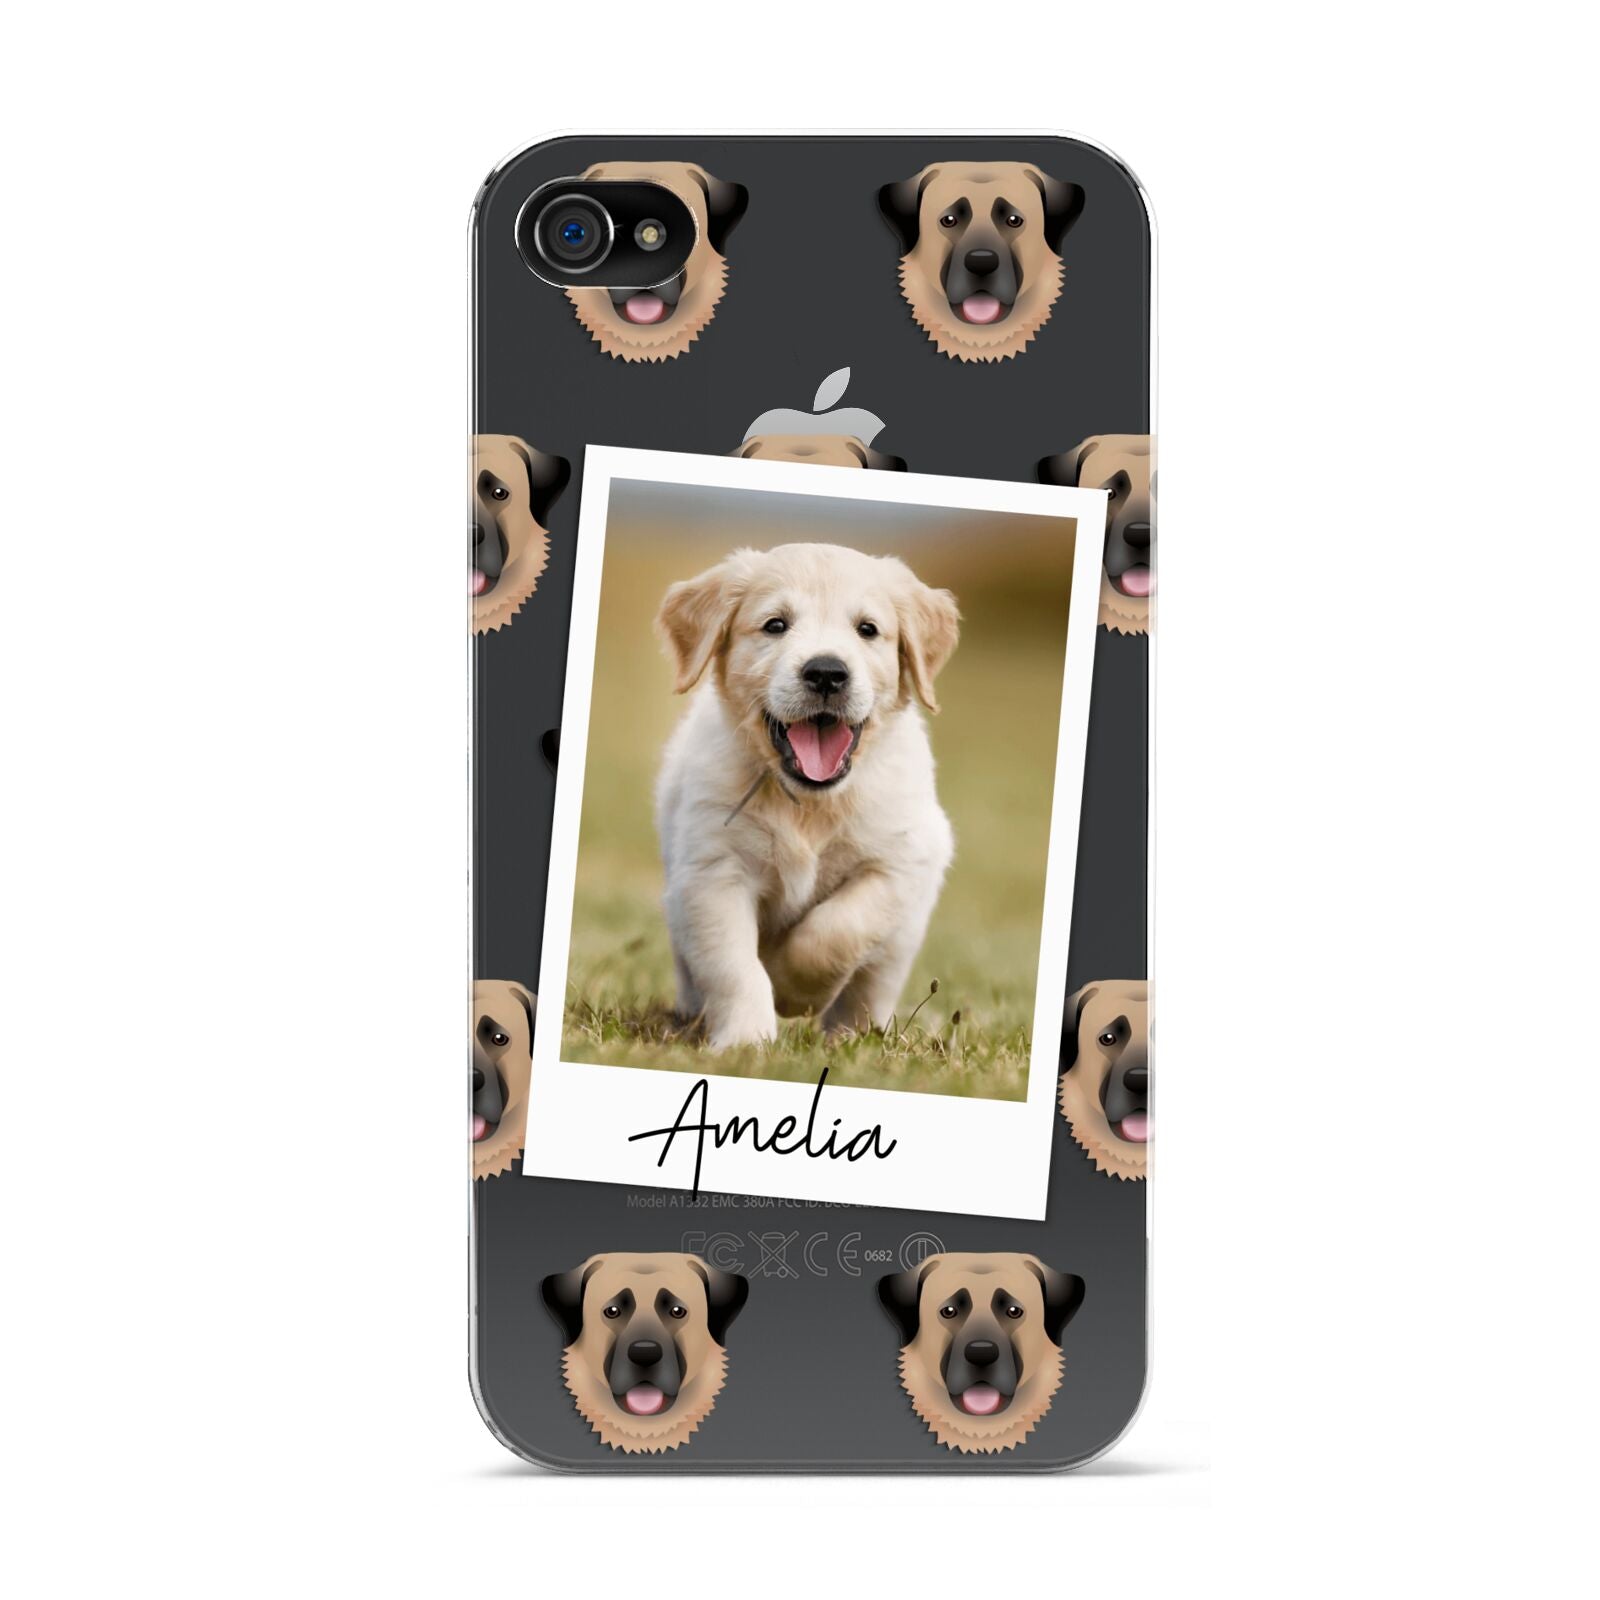 Personalised Dog Photo Apple iPhone 4s Case